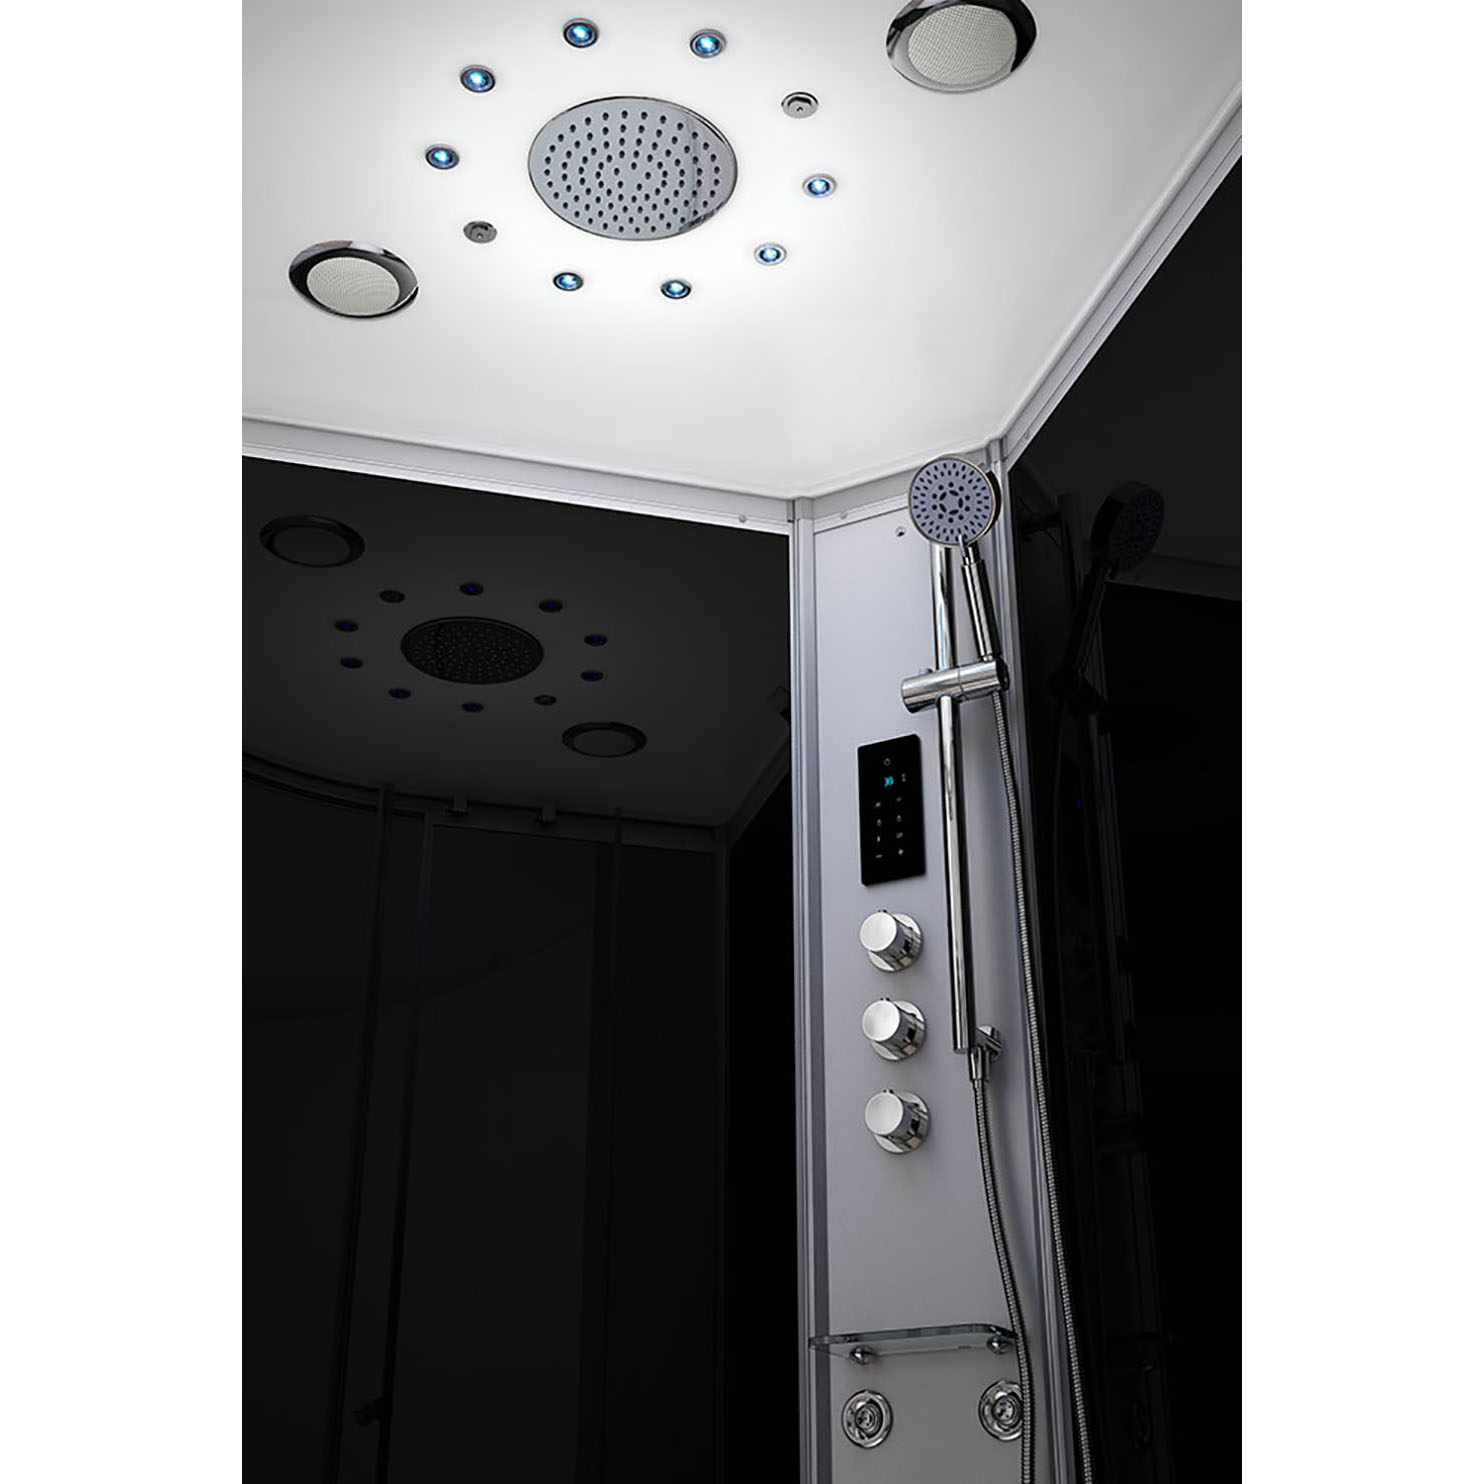 M-SPA - Biely hydromasážny sprchovací box a parná sauna 80 x 80 x 217 cm